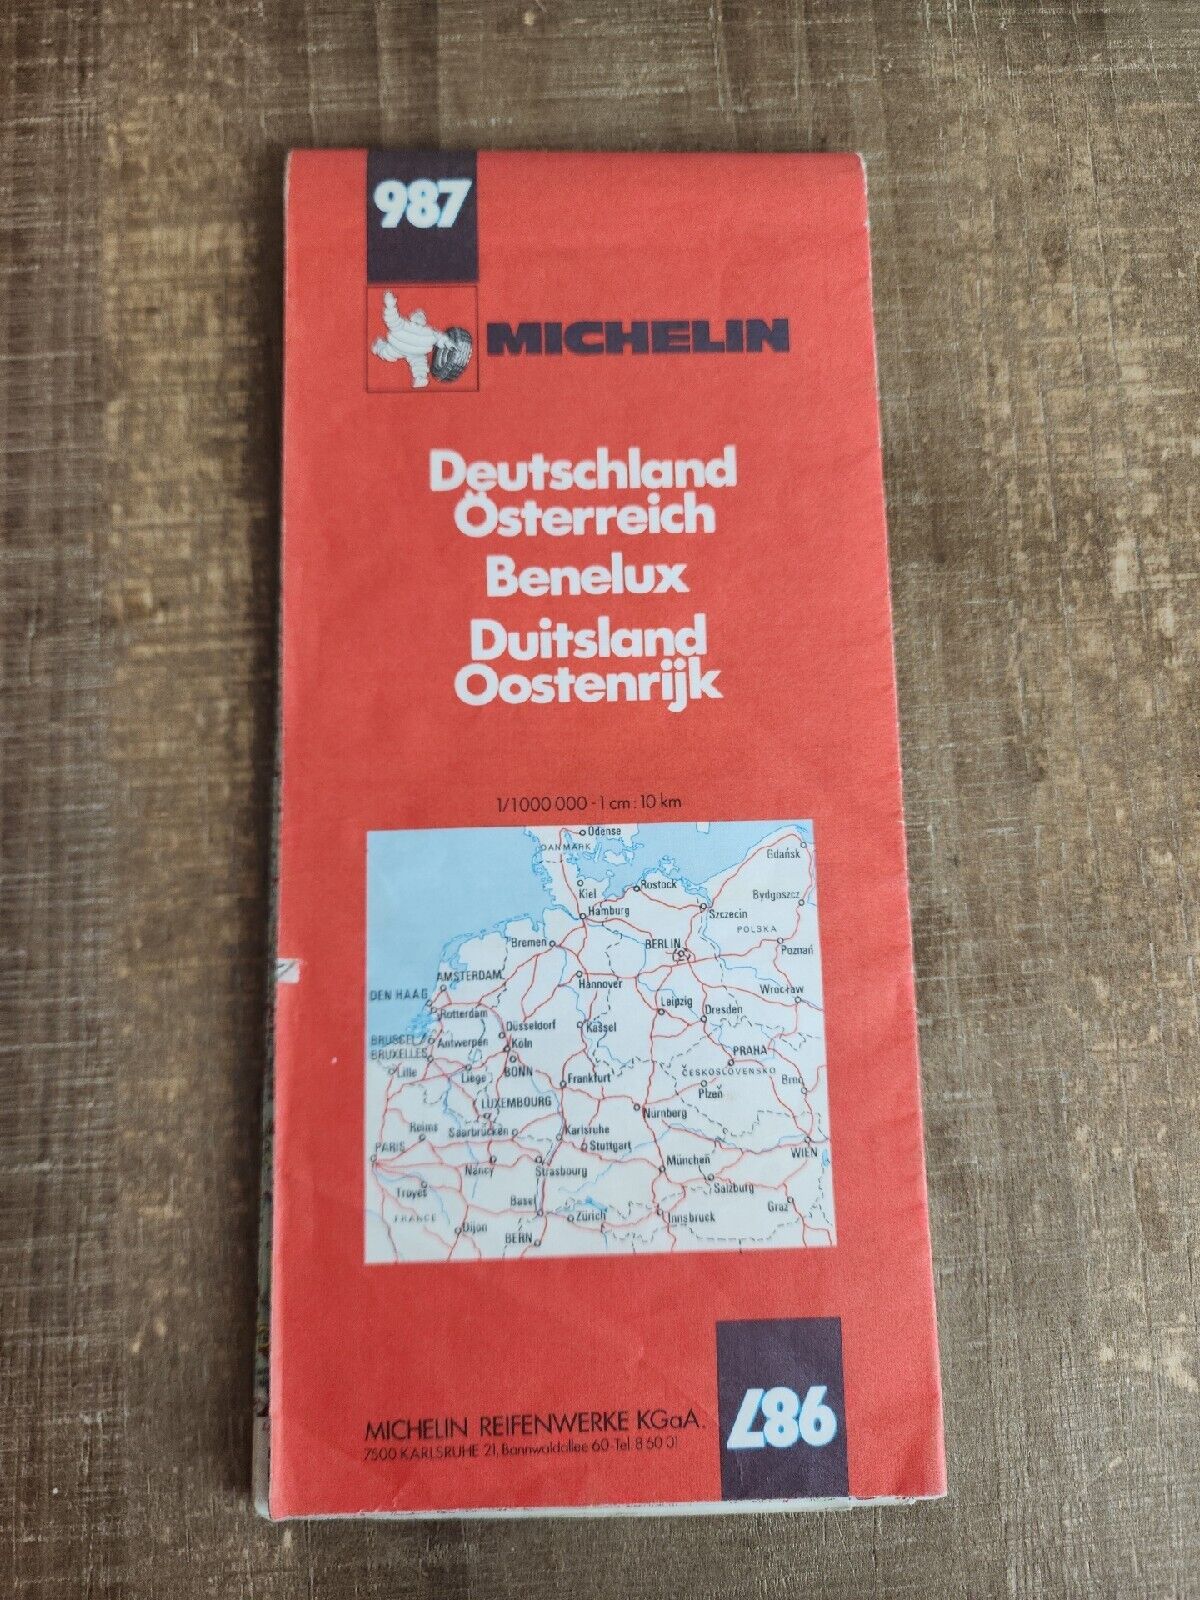 Vintage 1986 987 Michelin Austria Germany Map